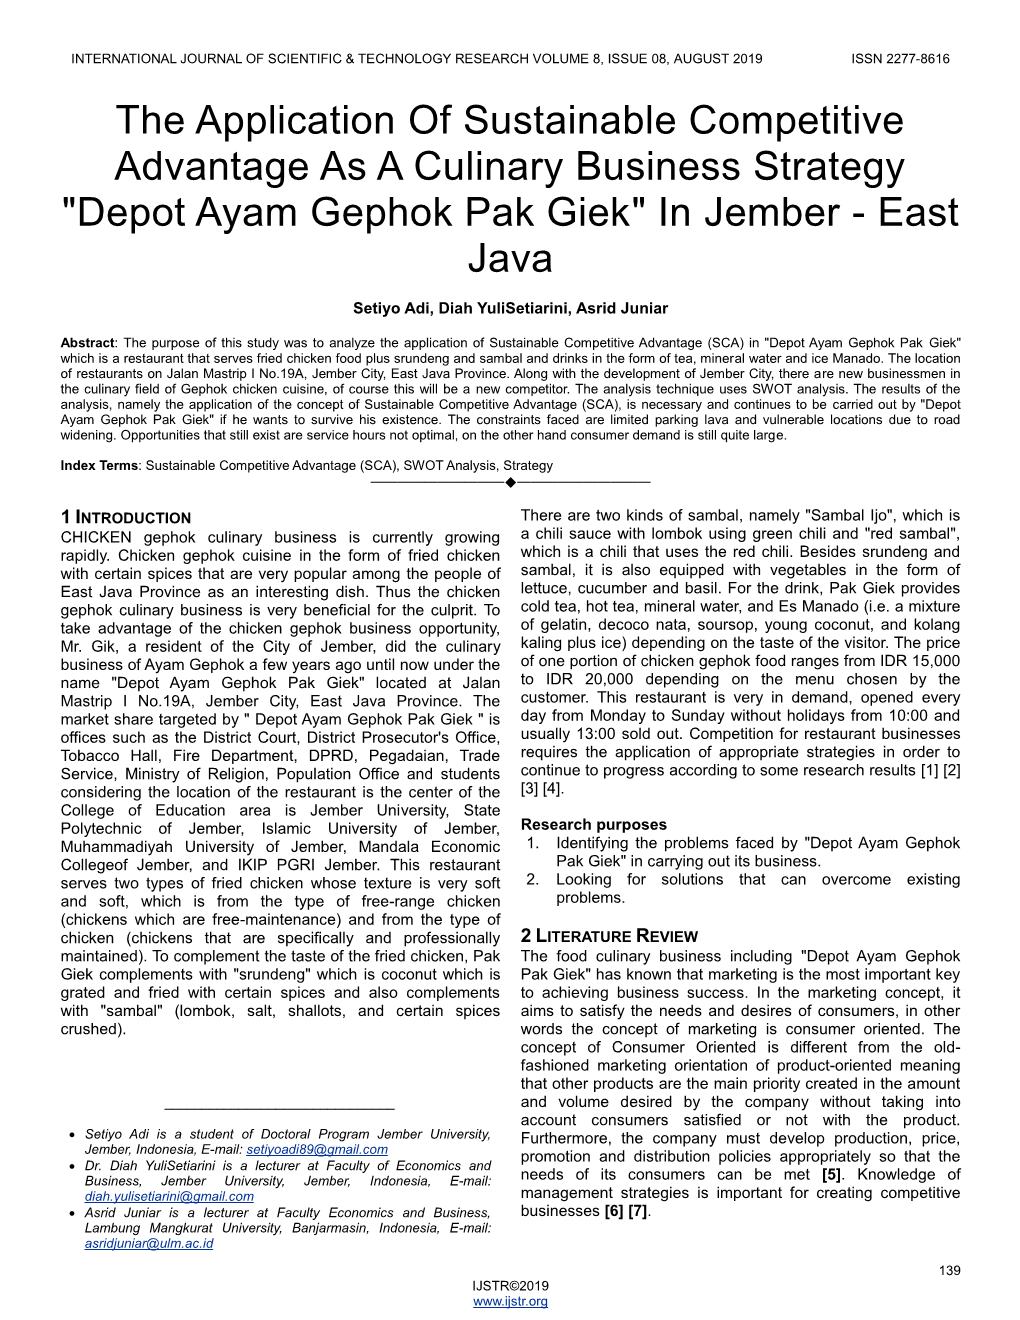 "Depot Ayam Gephok Pak Giek" in Jember - East Java